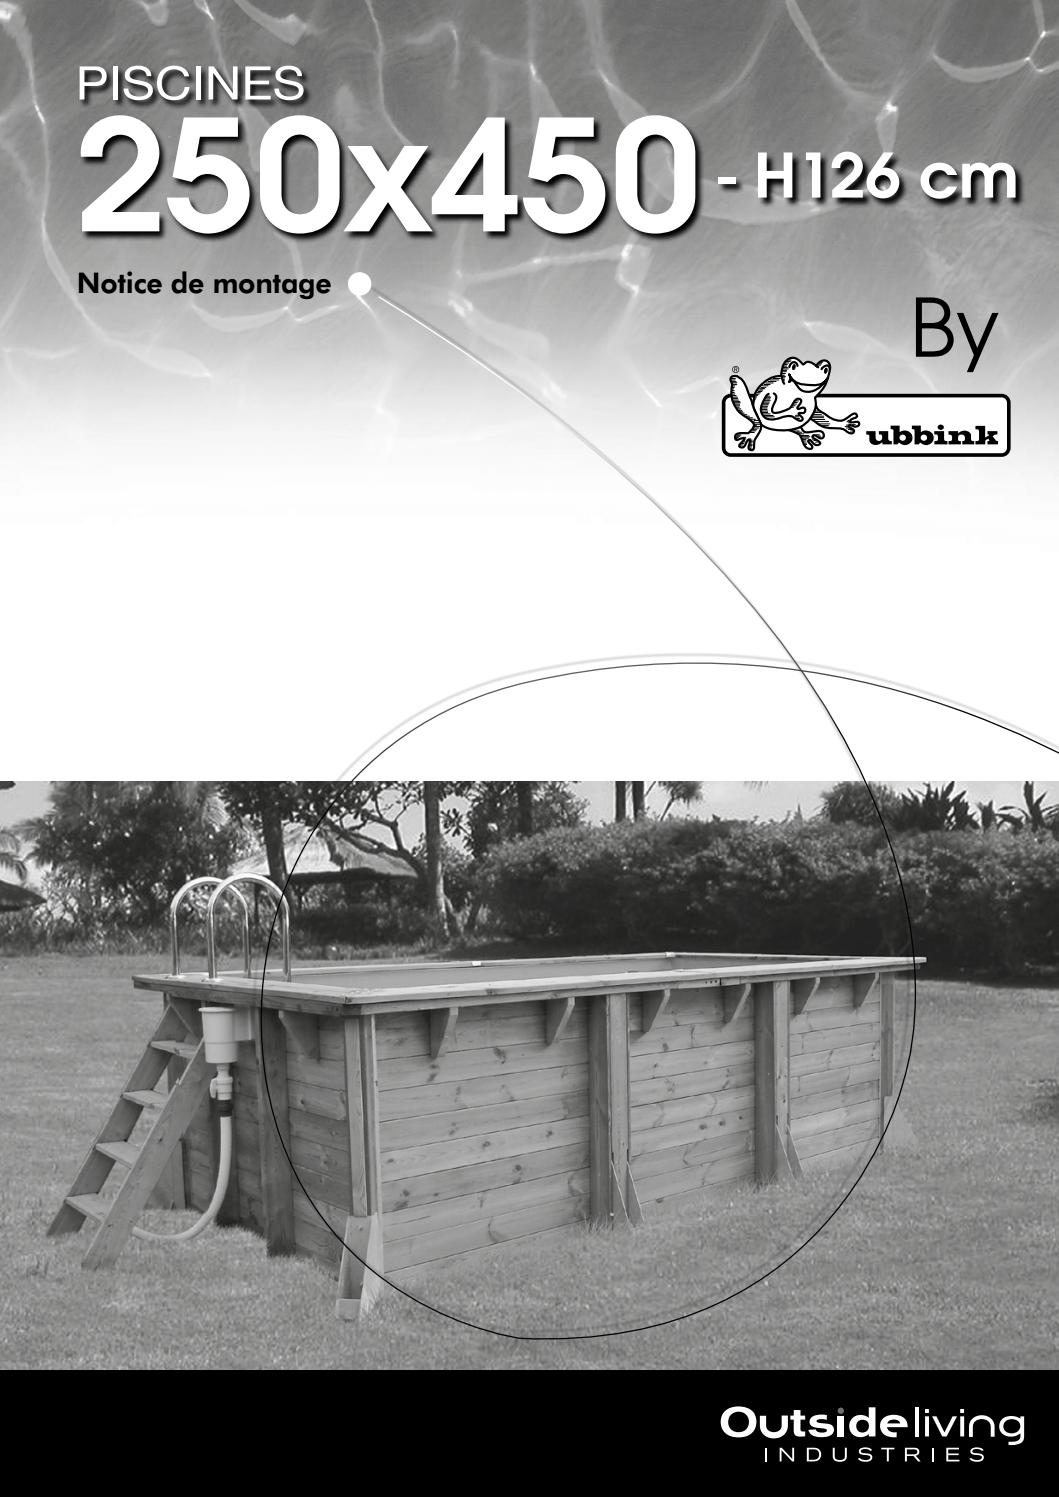 Notice 250X450 - H126-2020-Fr.pdf By ____ - Issuu concernant Filtre A Sable Piscine Mode D Emploi